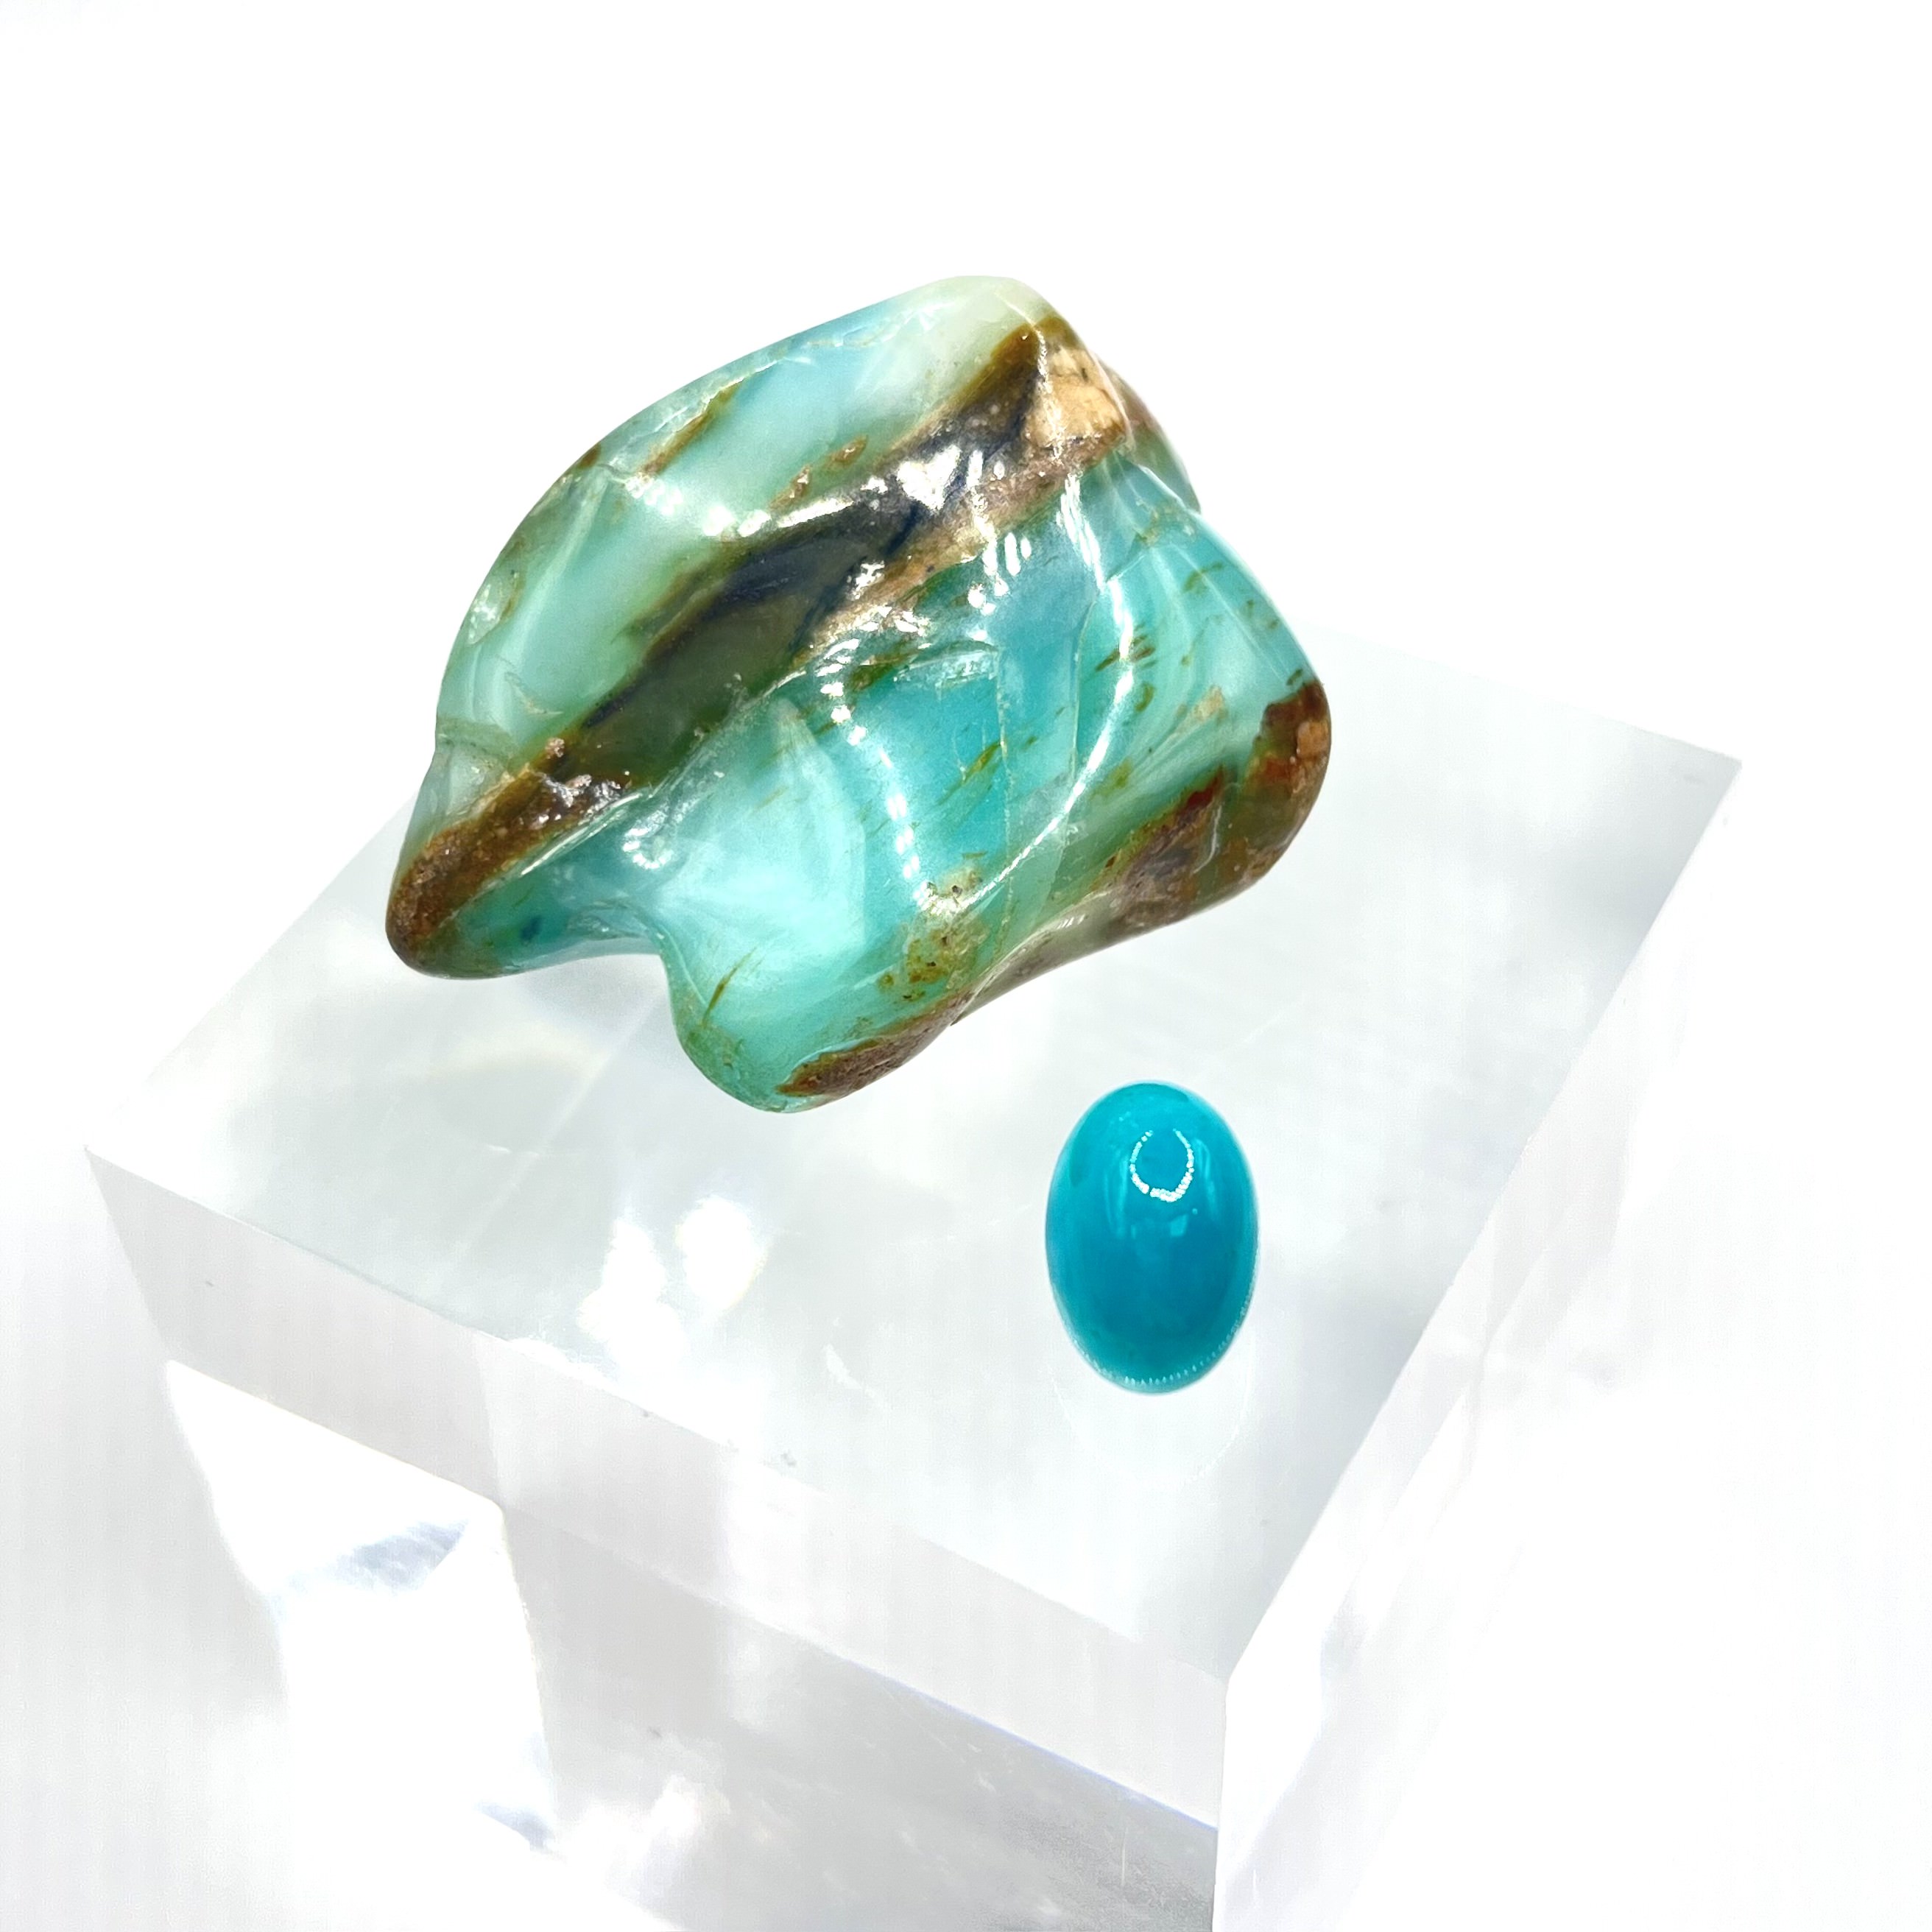 A piece of polished blue opal specimen with a cabochon cut gem quality blue opal.